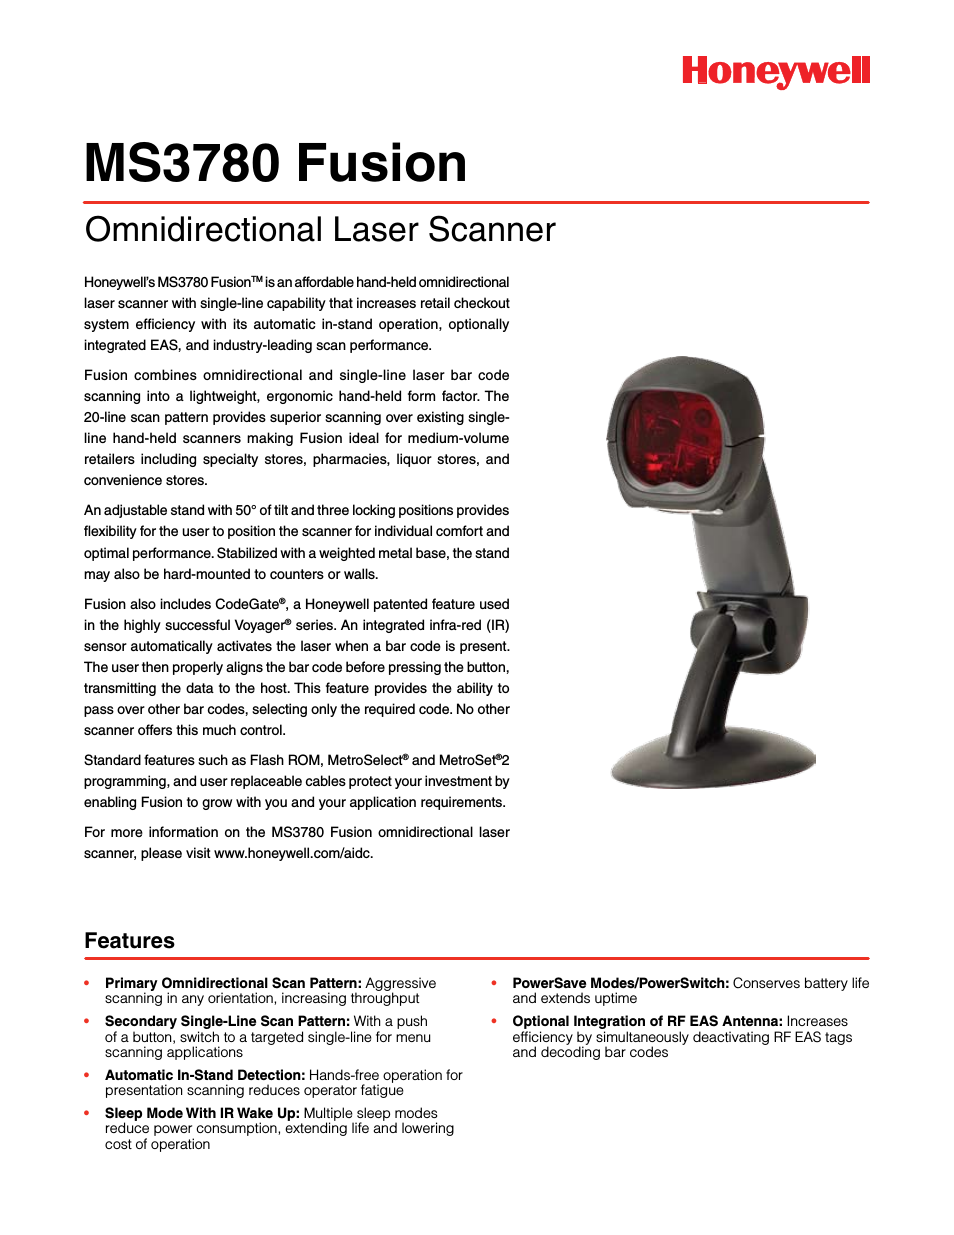 Fusion MS3780